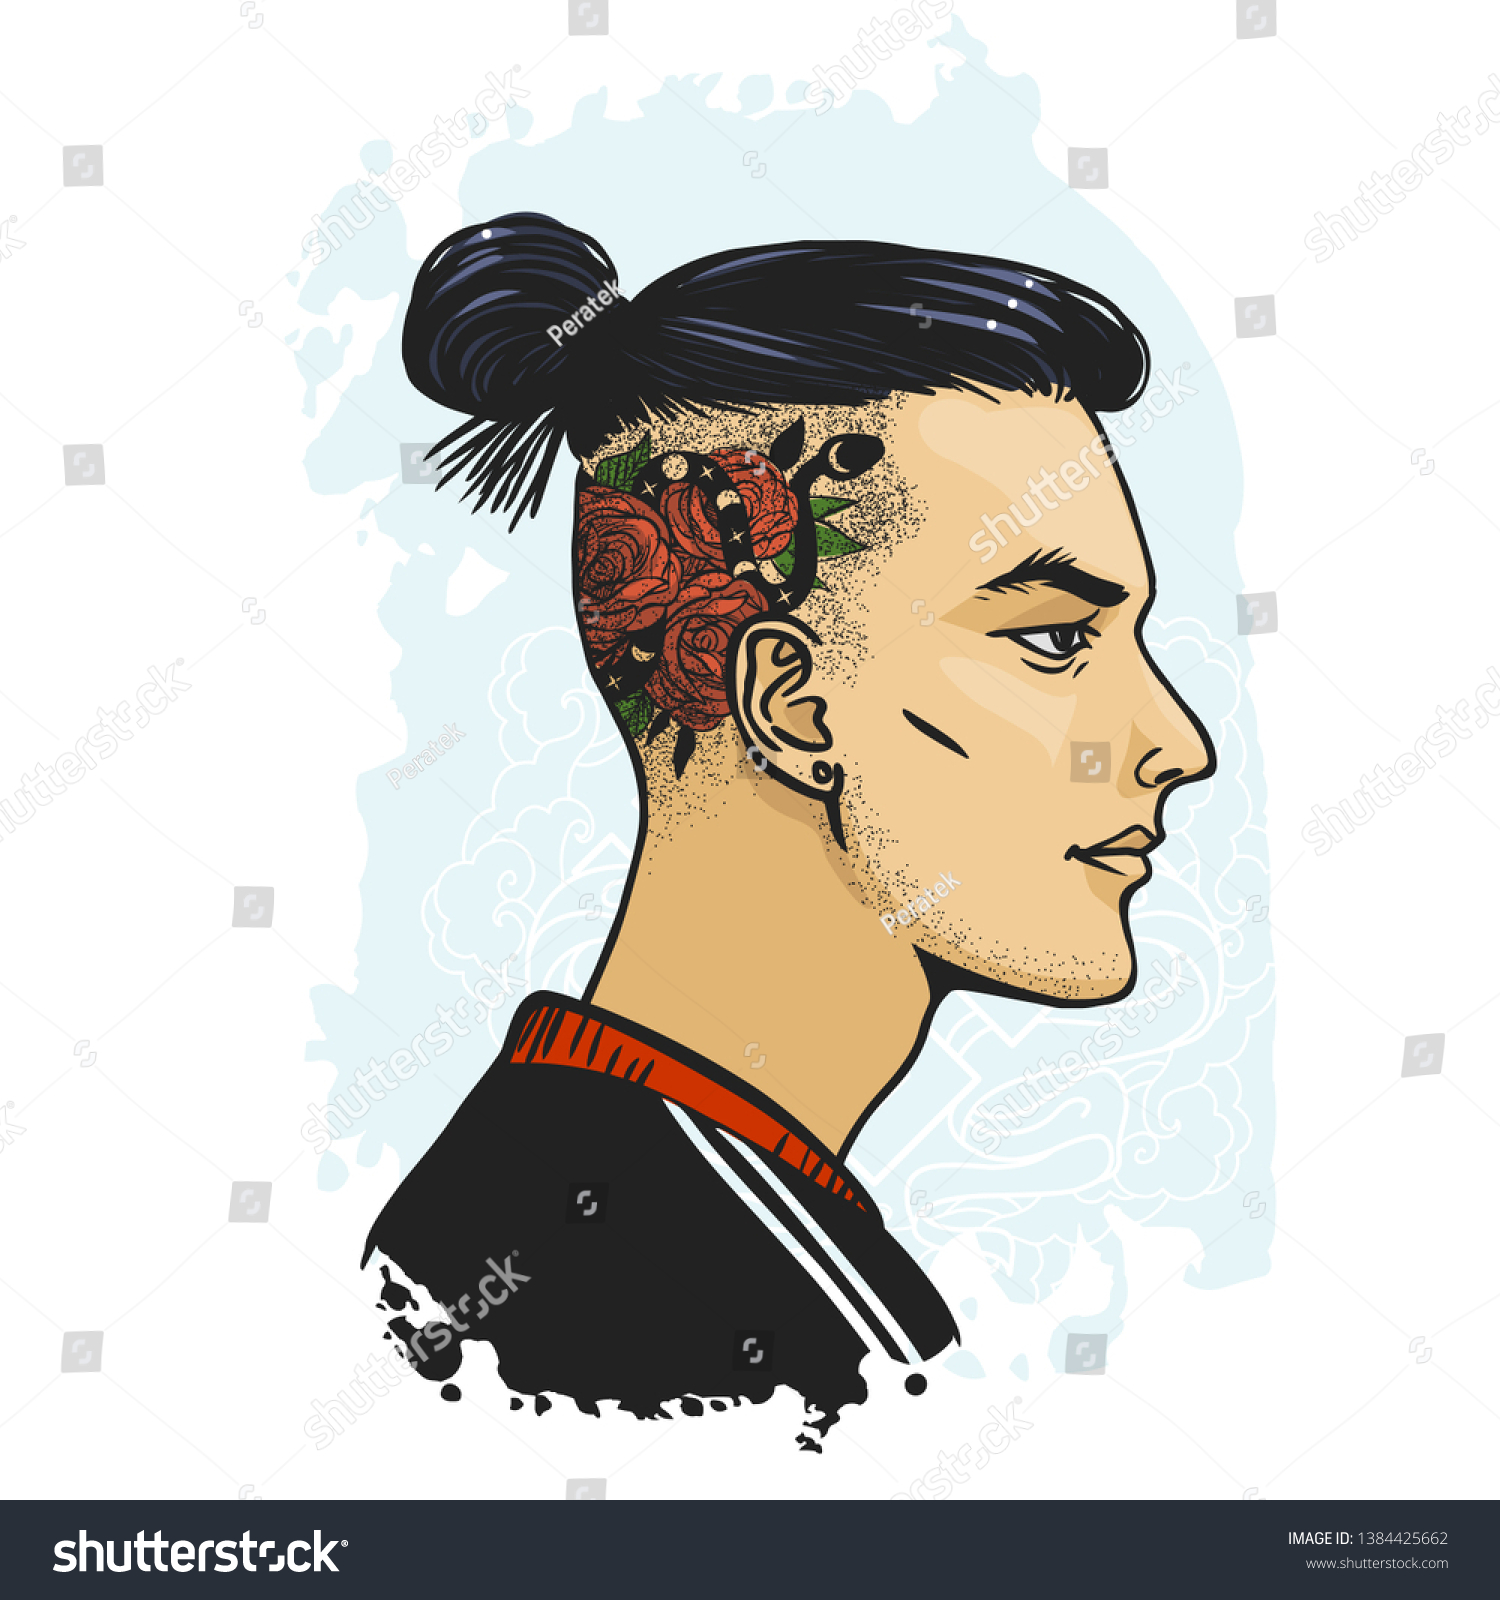 Modern Samurai Handsome Asian Guy Vector Royalty Free Stock Image